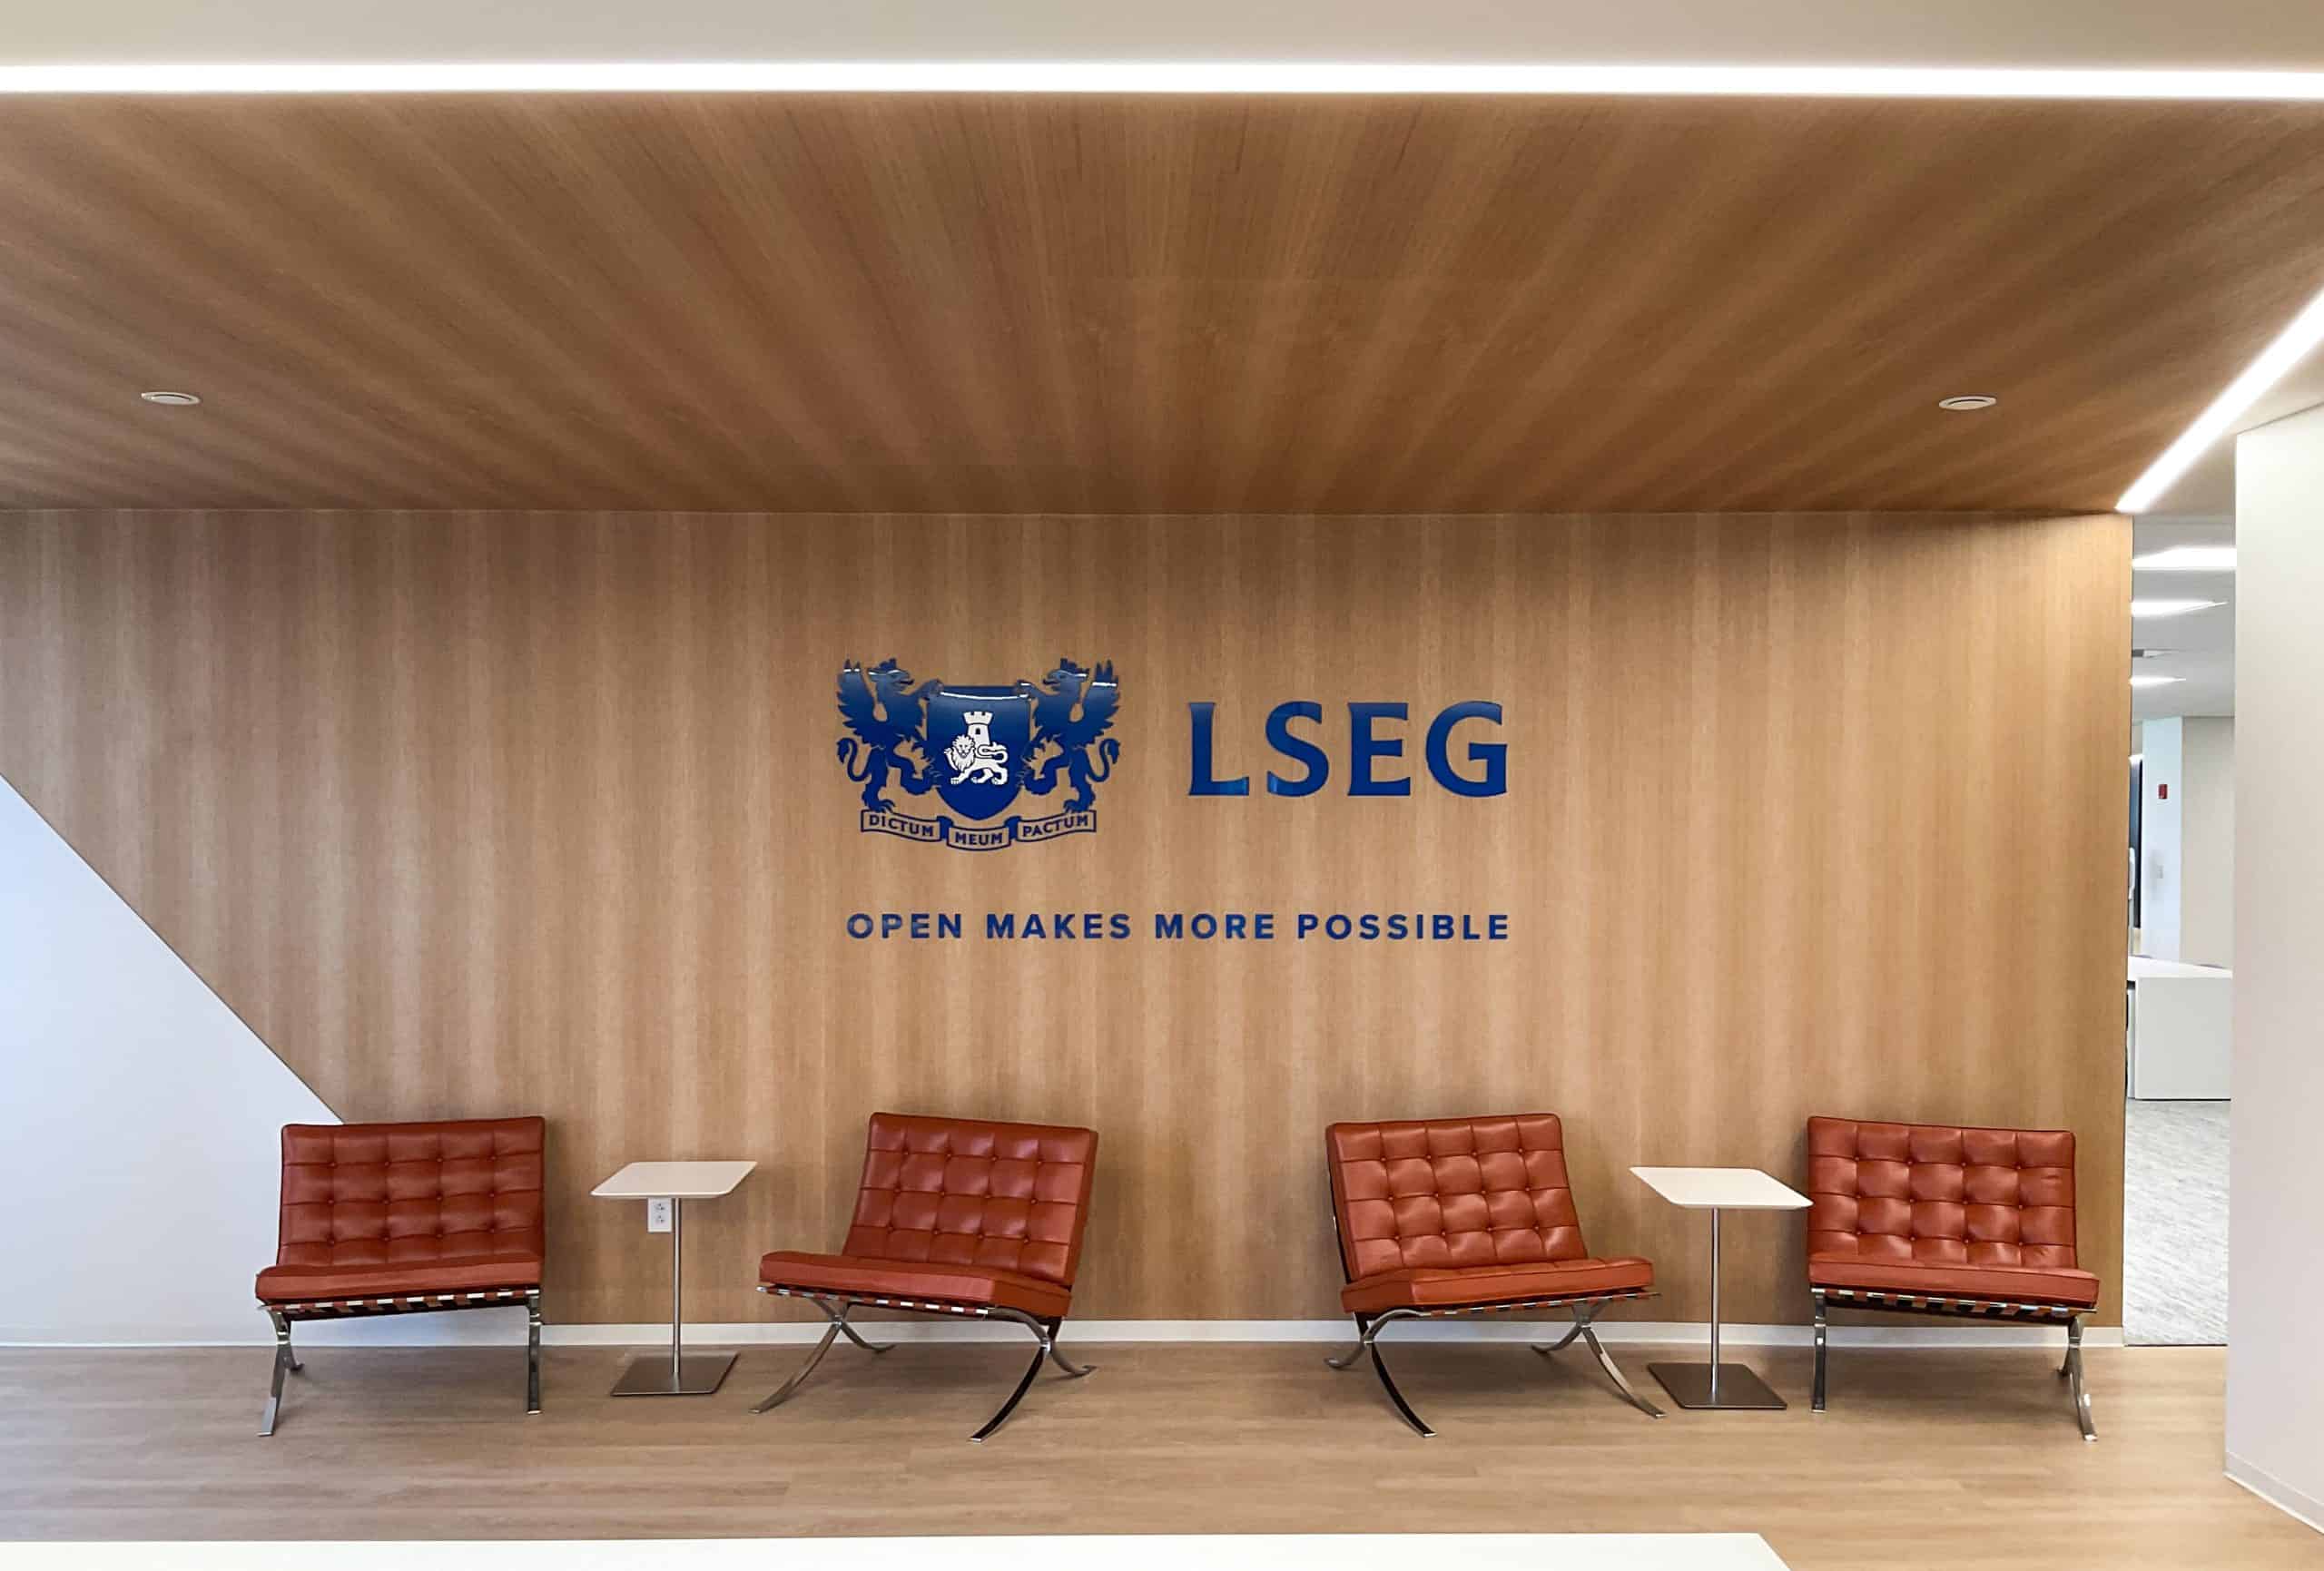 Dimensional blue logo for LSEG against wood wall